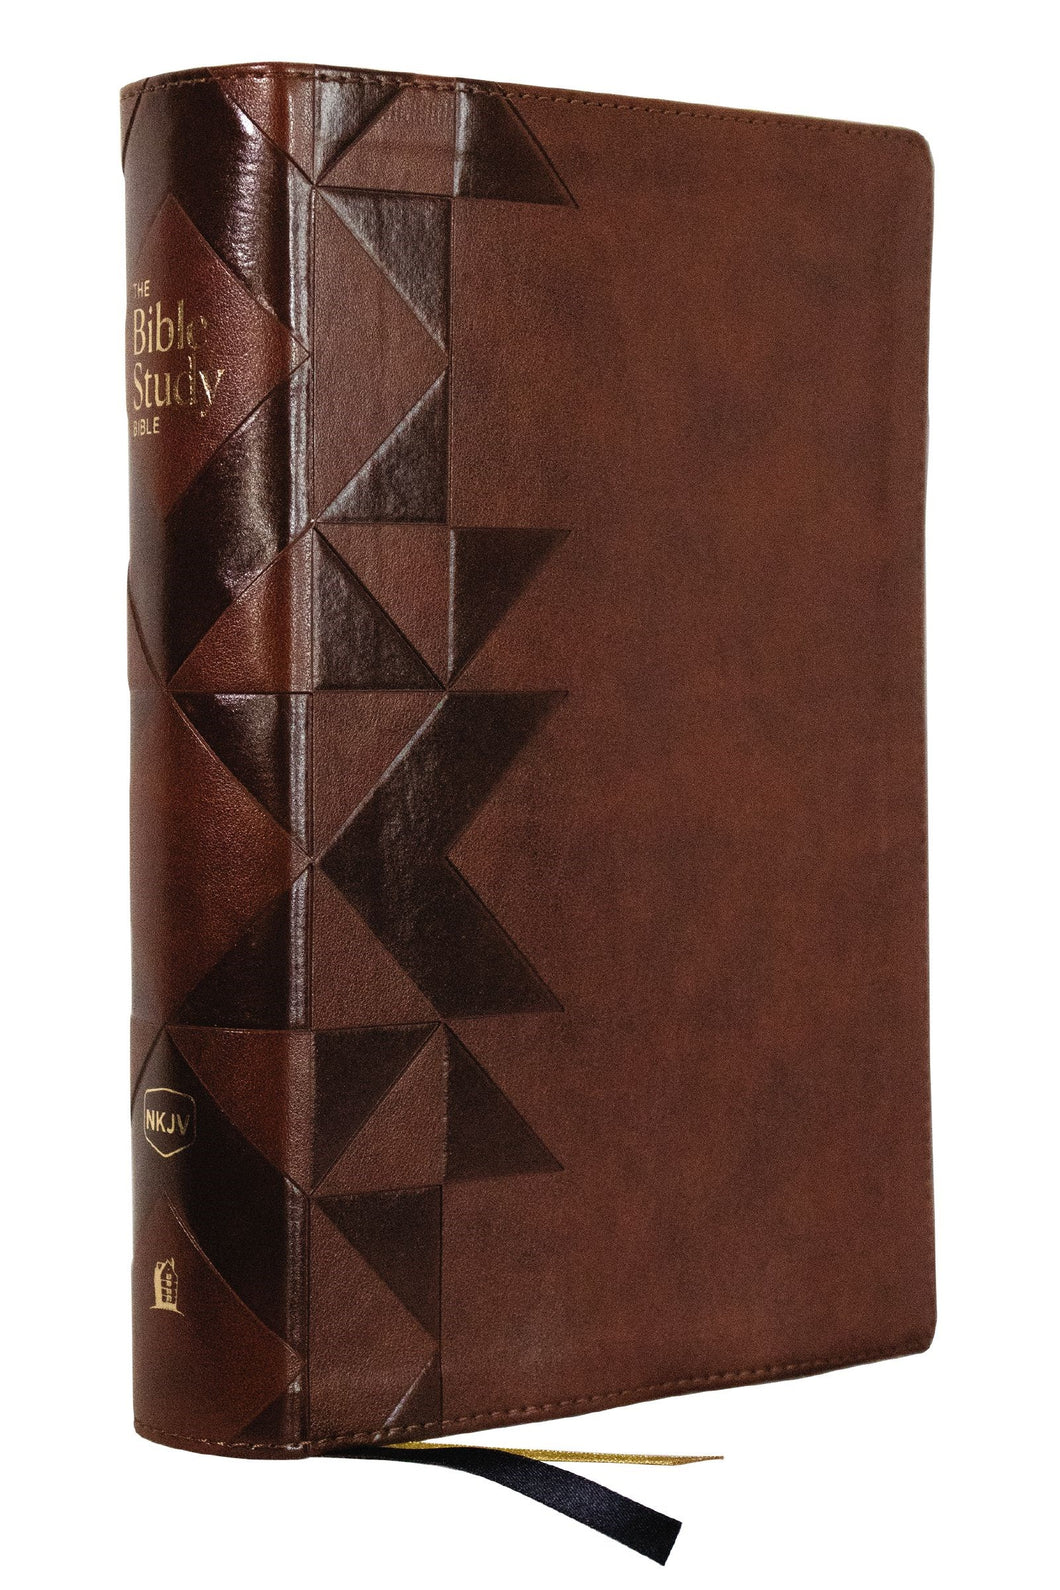 NKJV The Bible Study Bible (Comfort Print)-Brown Leathersoft